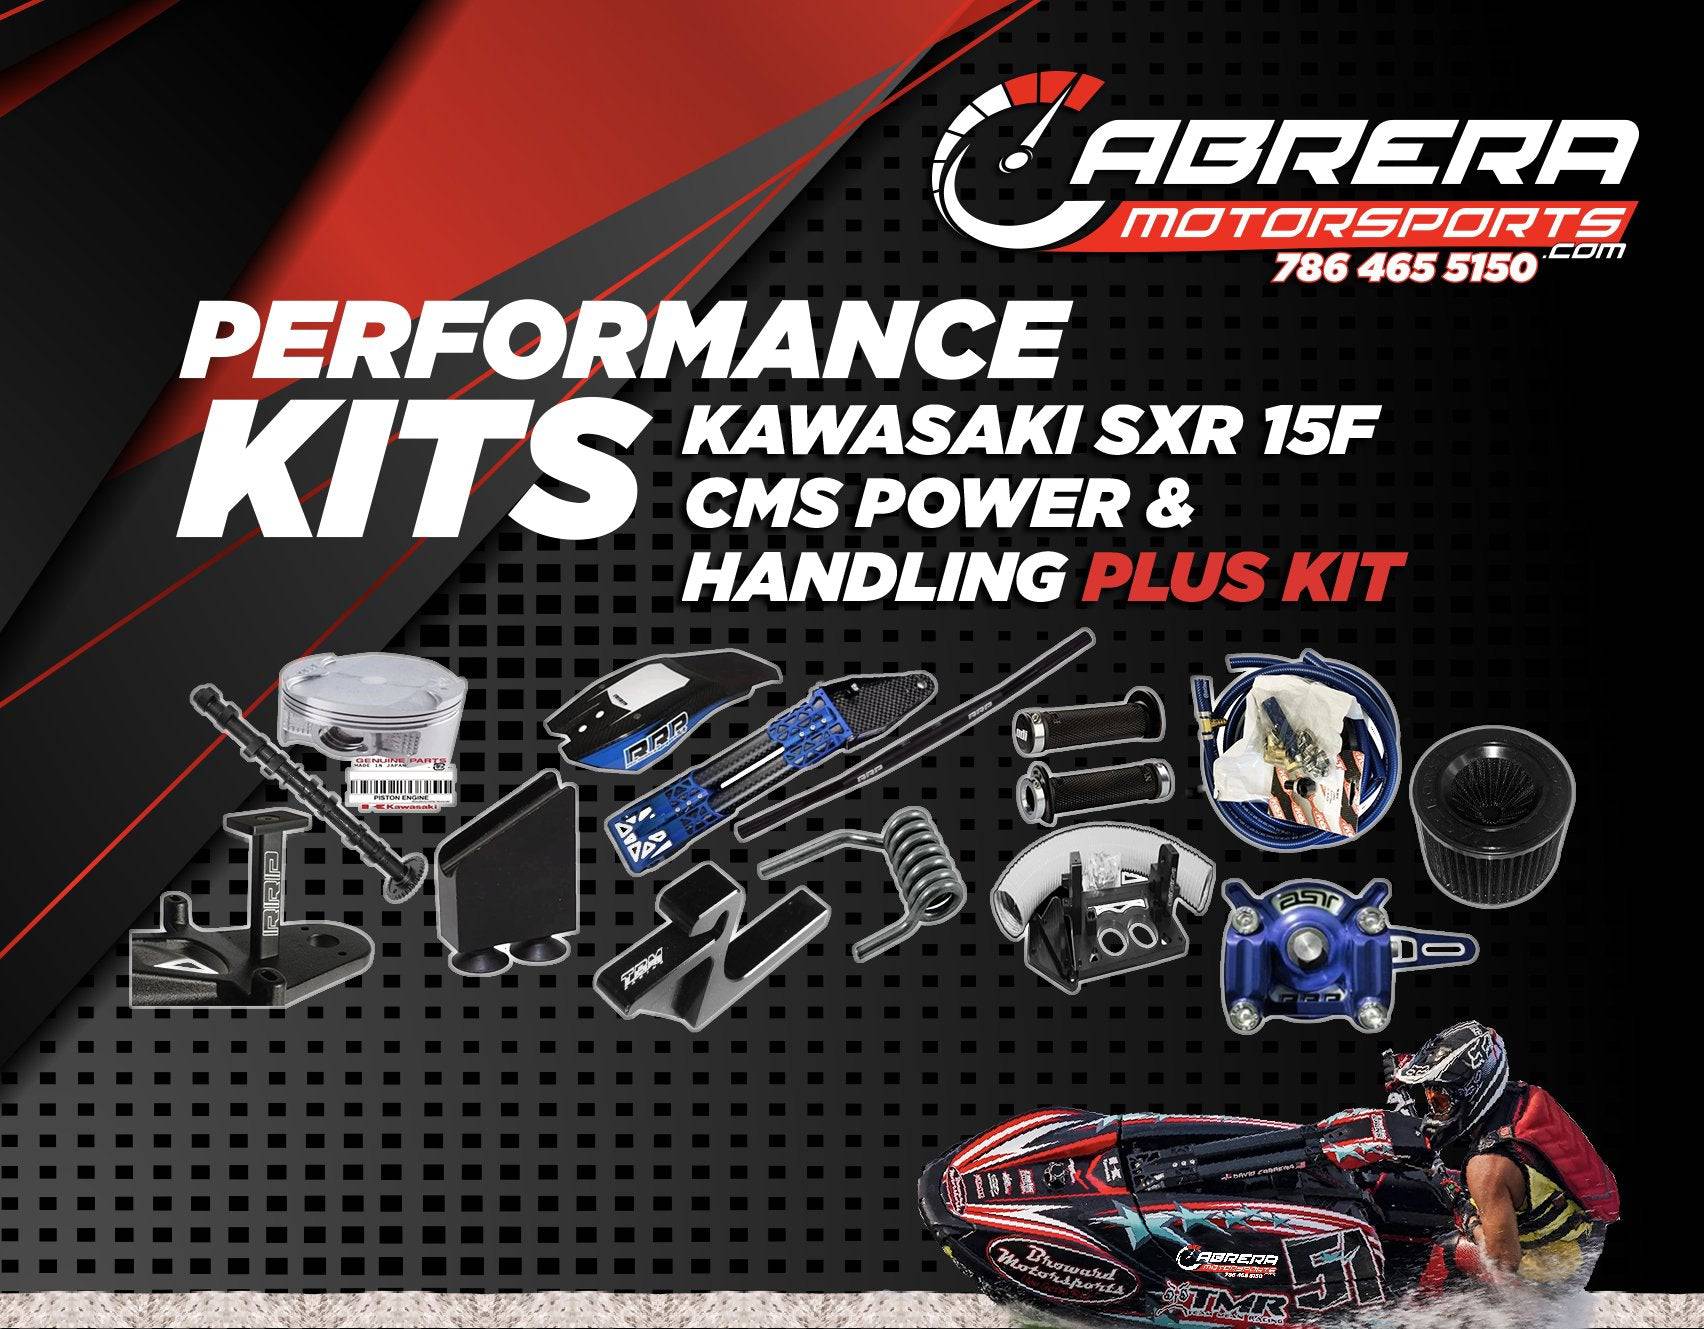 Kawasaki Sxr 15f Cms Power Handling Plus Kit Cabrera Motorsports